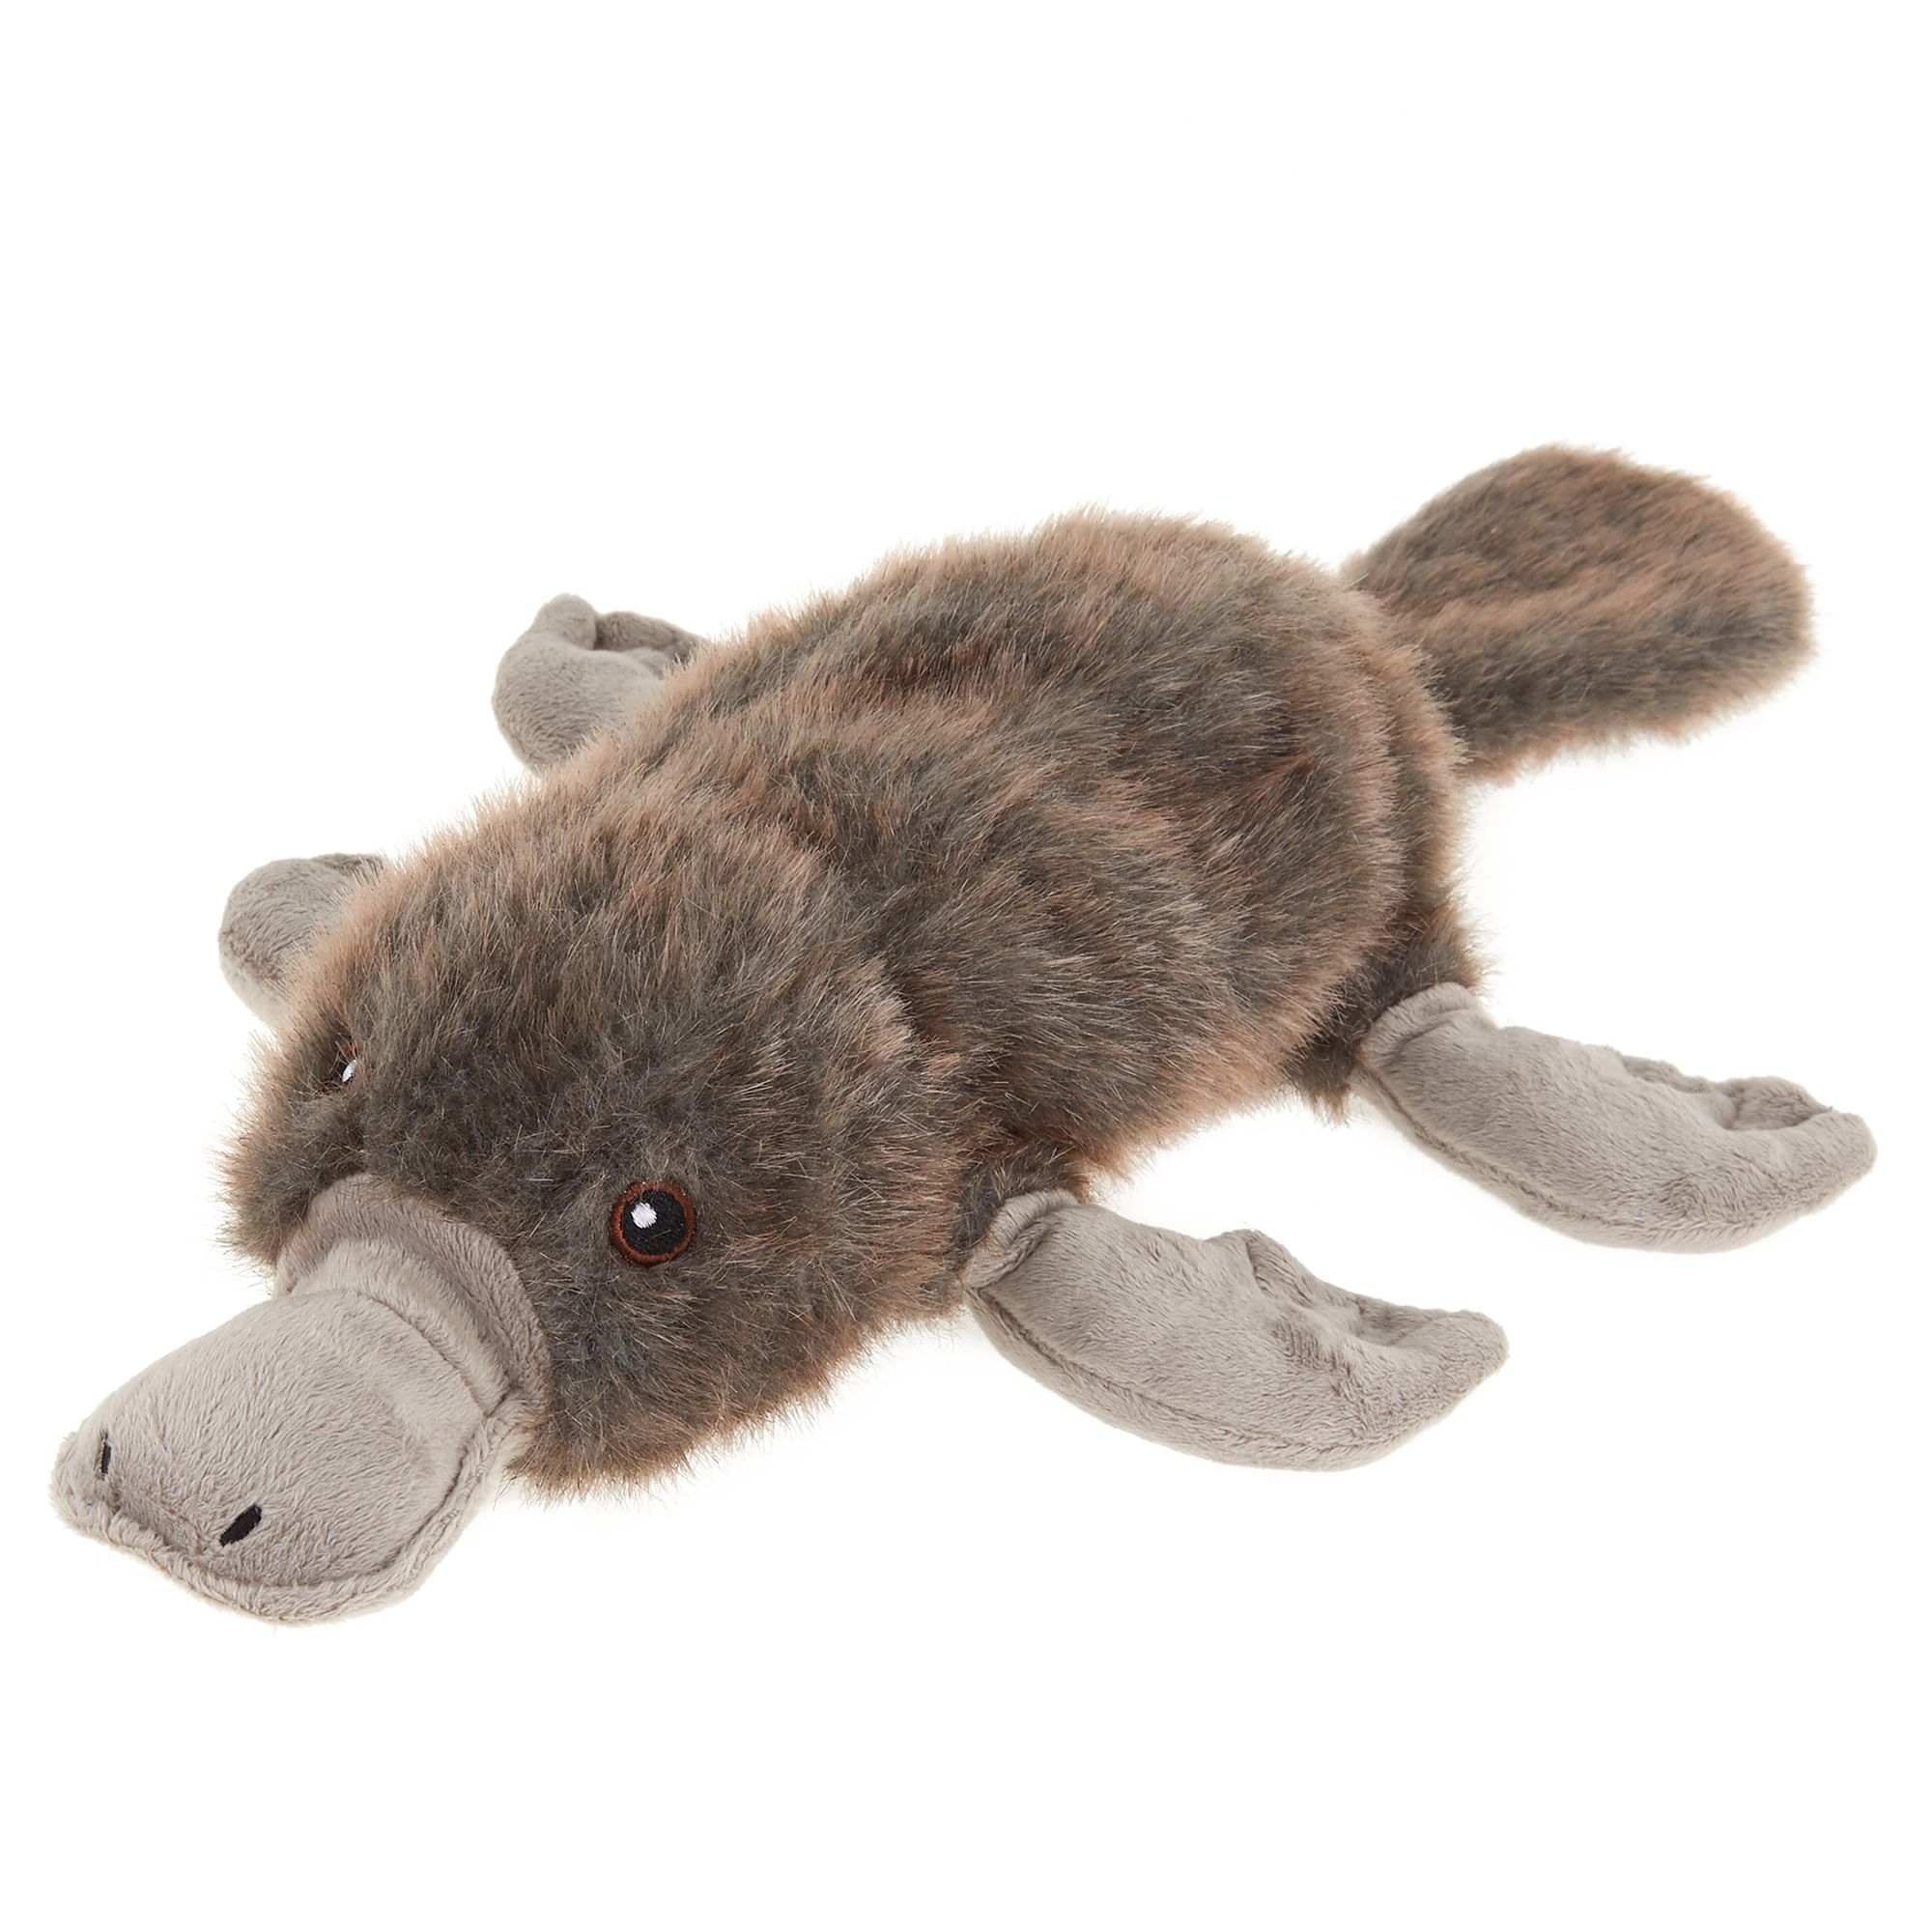 stuffed platypus